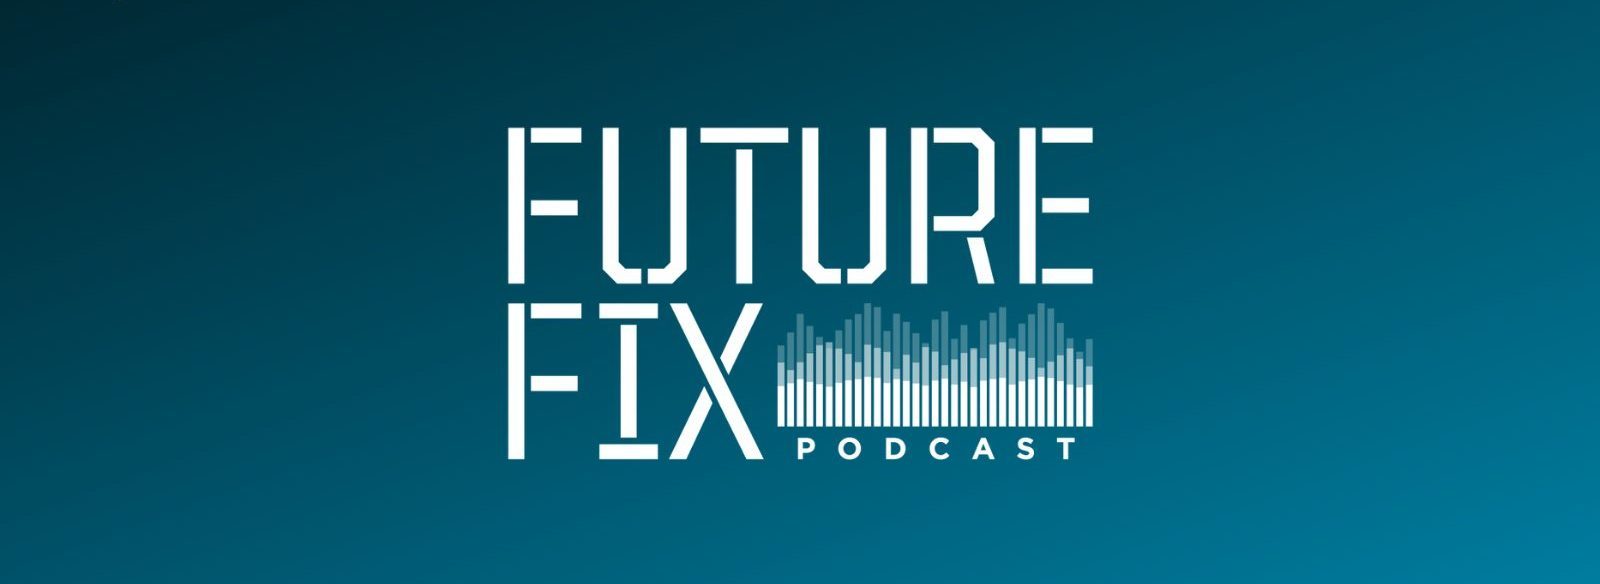 Future fix logo podcast on blue/black backg